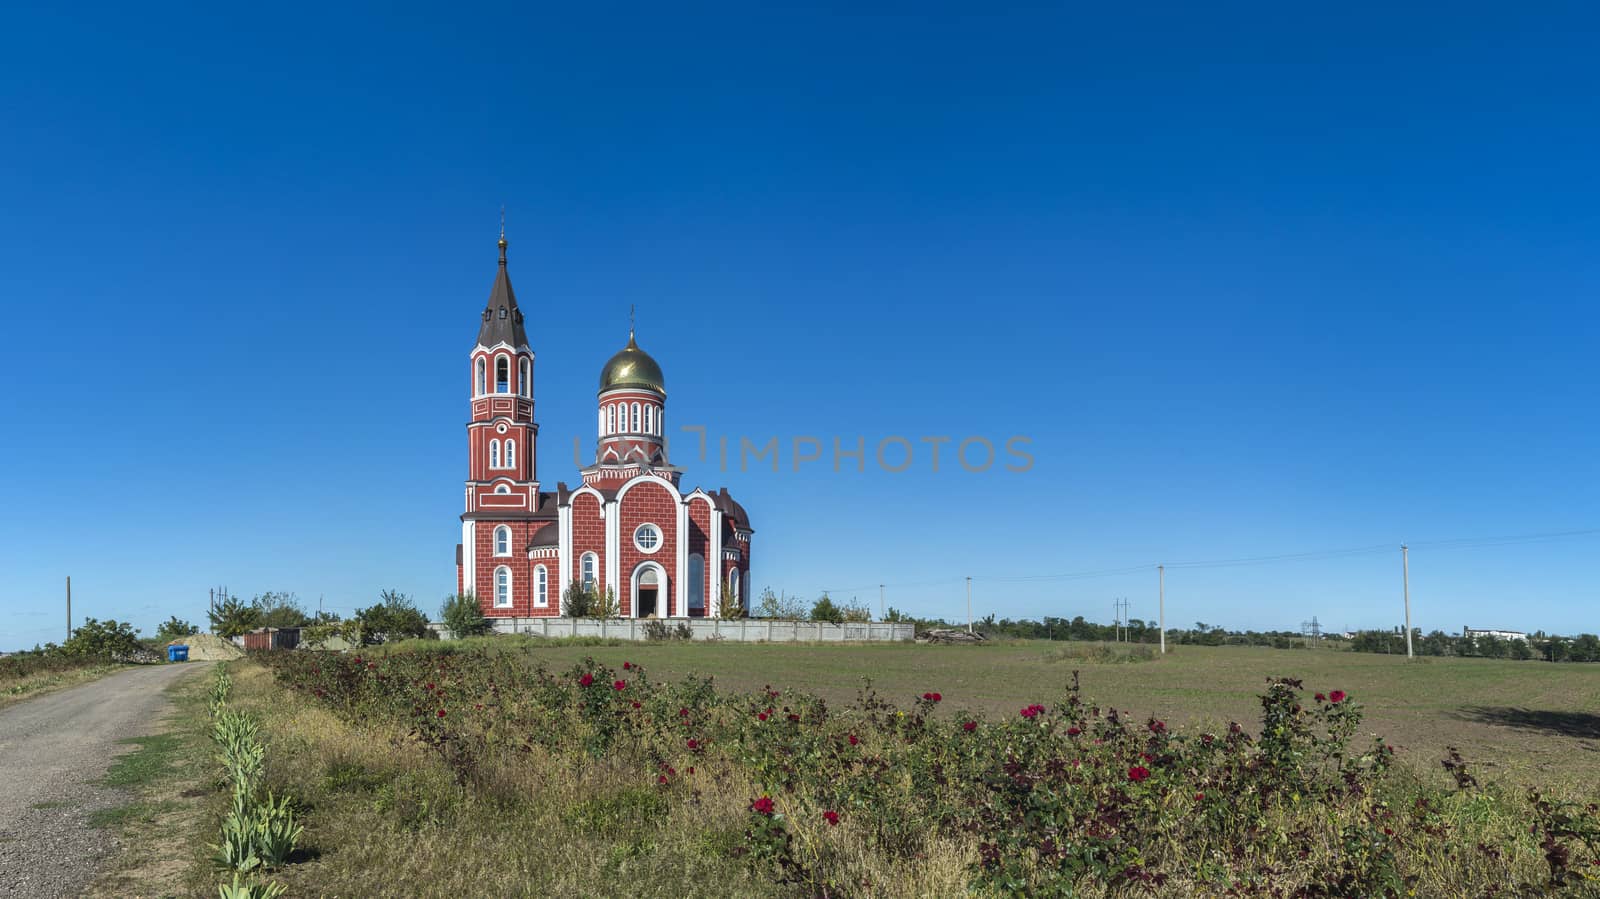 Svyato-Heorhivska Church in Odessa, Ukraine by Multipedia